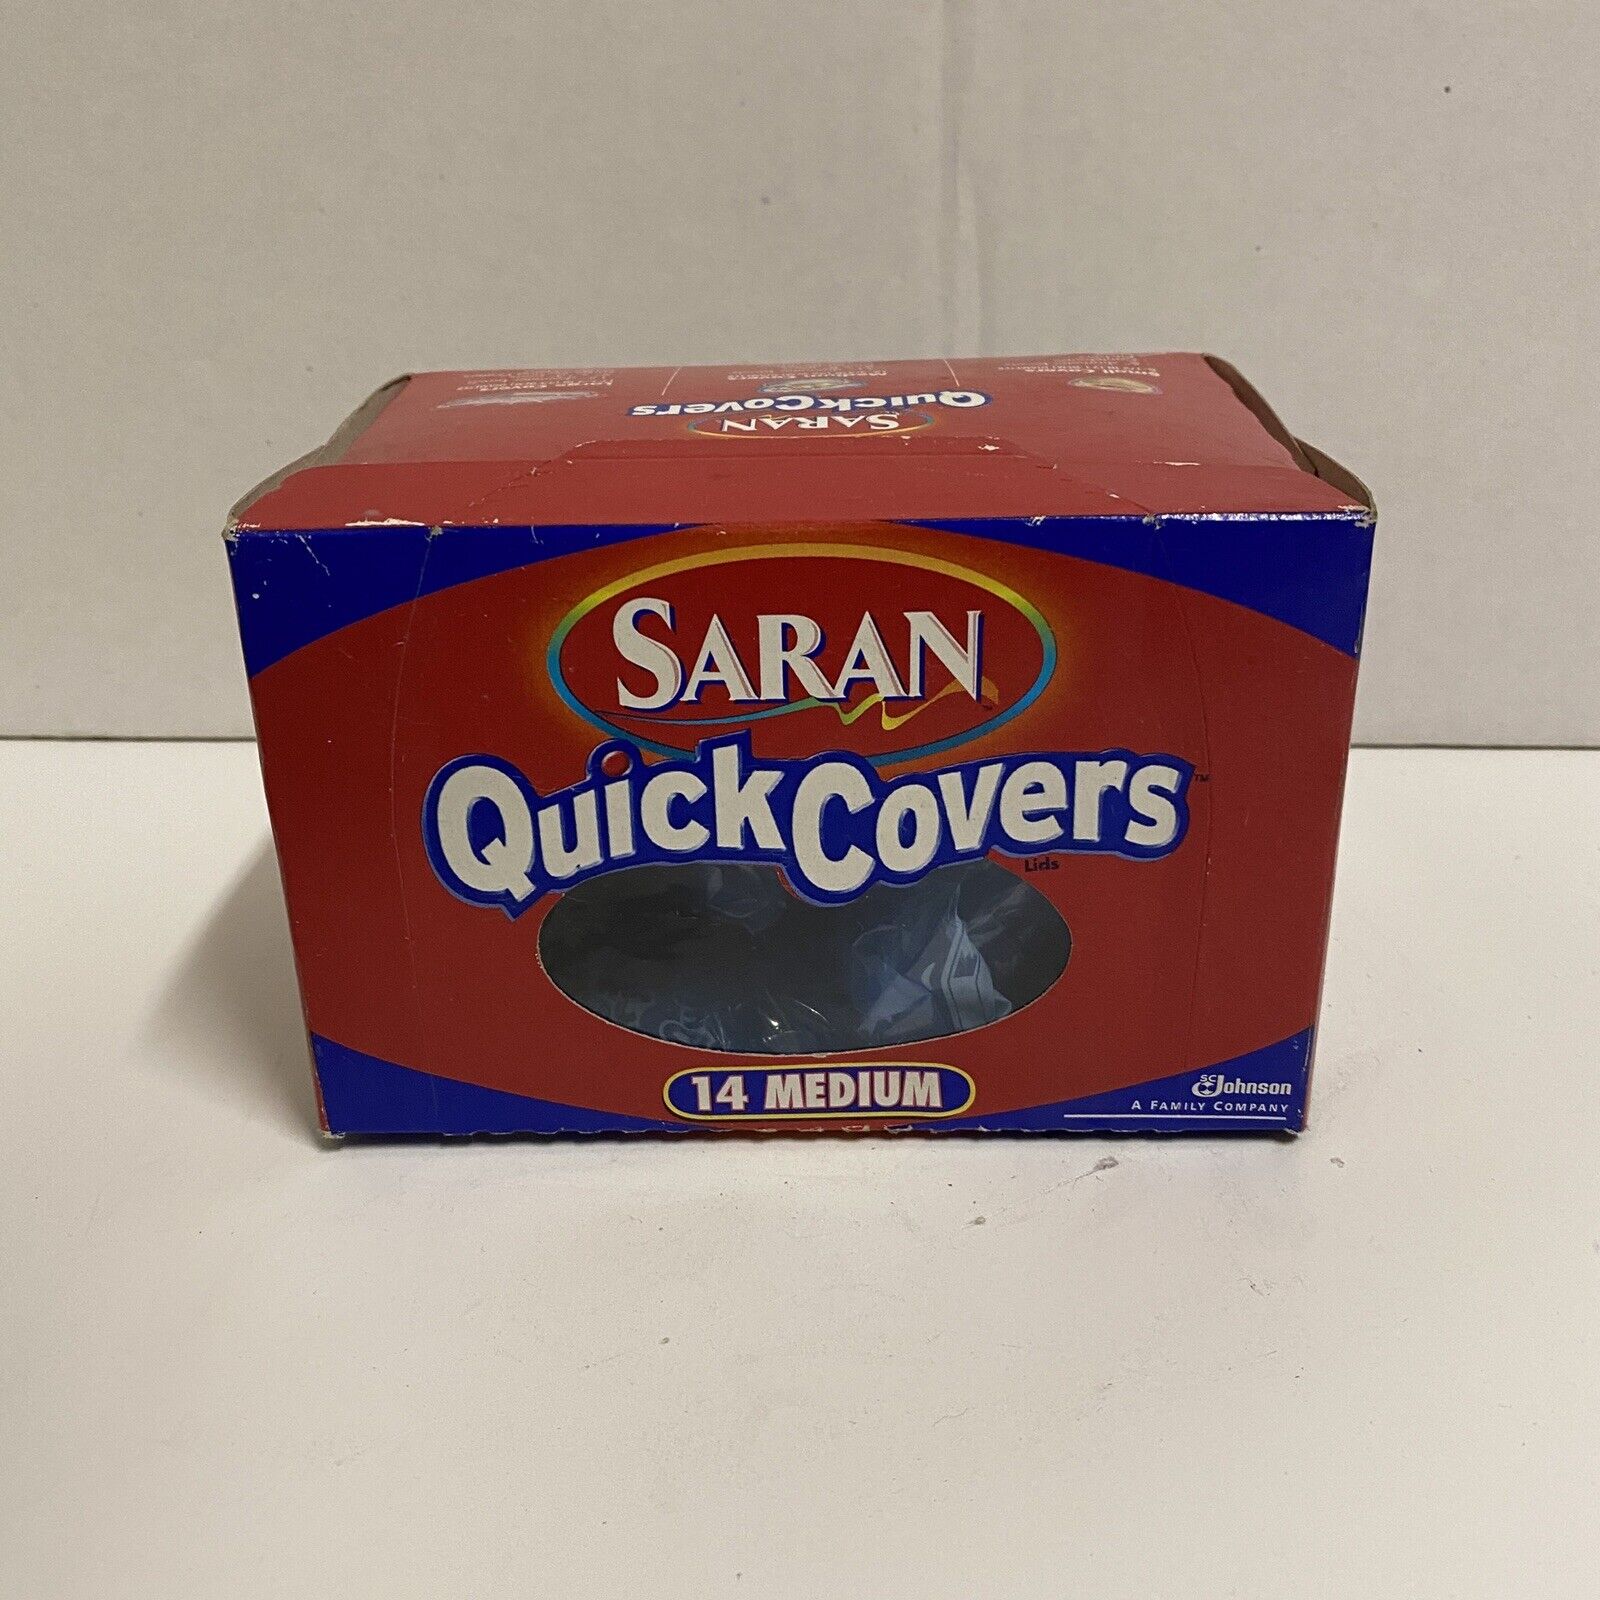 Saran Quick Covers Lids 14 Medium Covers Johnson Vintage